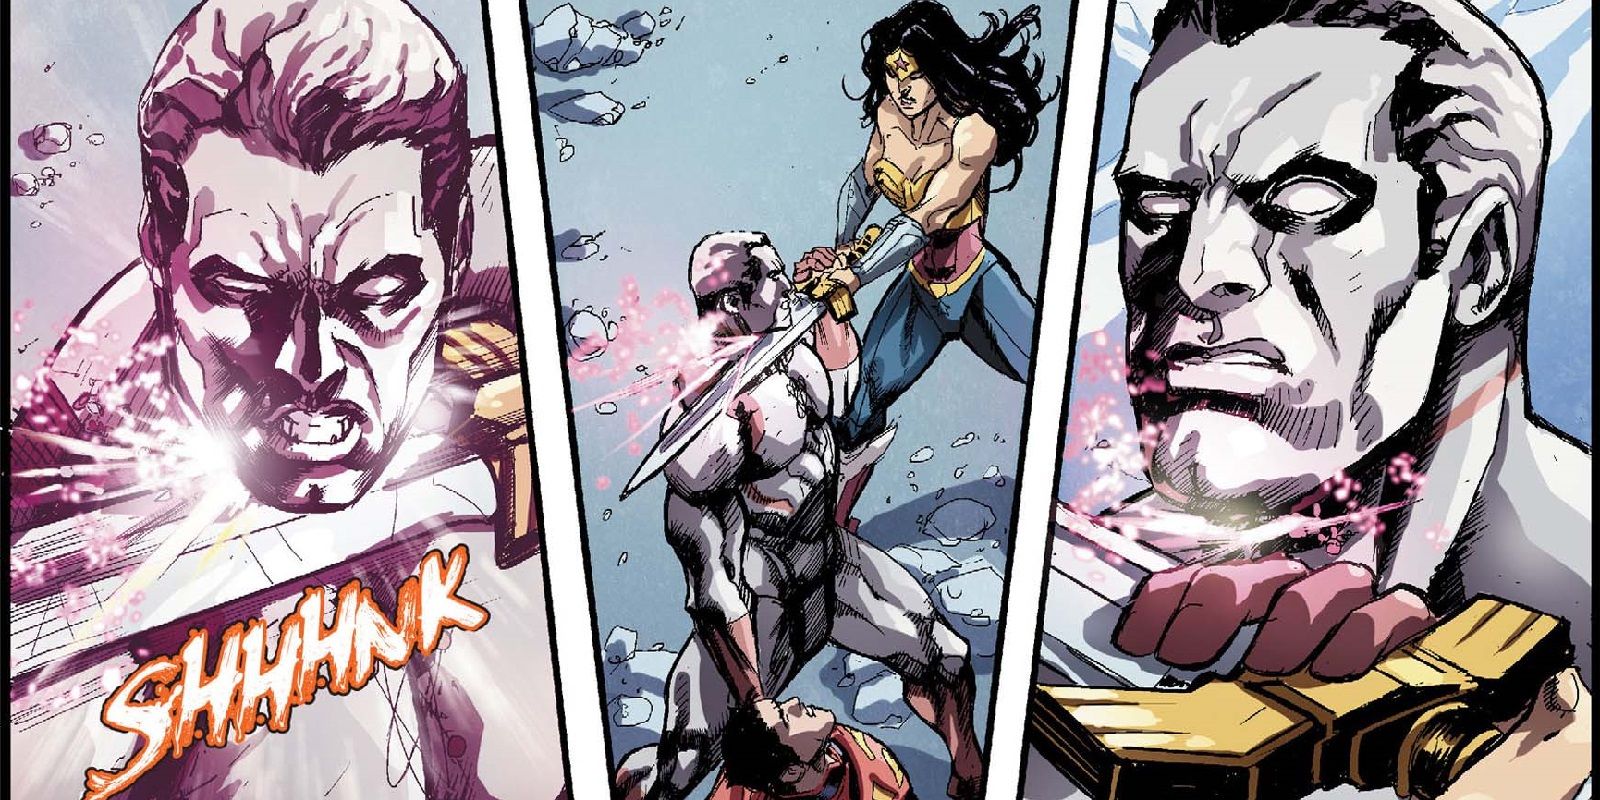 Wonder Woman kills Captain Atom in the Injustice comic